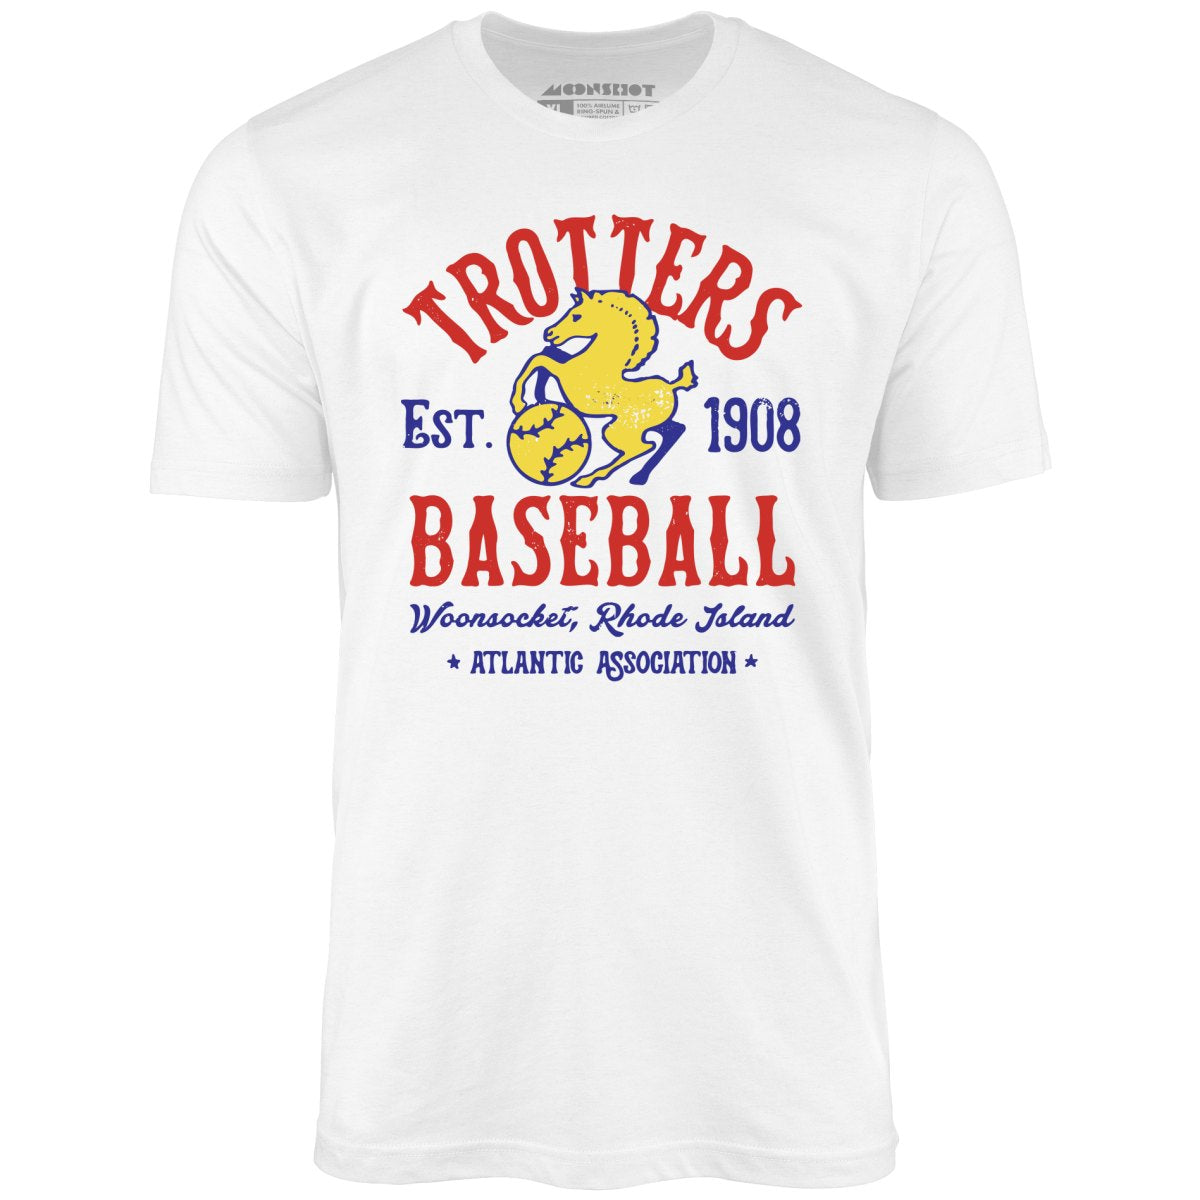 Woonsocket Trotters - Rhode Island - Vintage Defunct Baseball Teams - Unisex T-Shirt